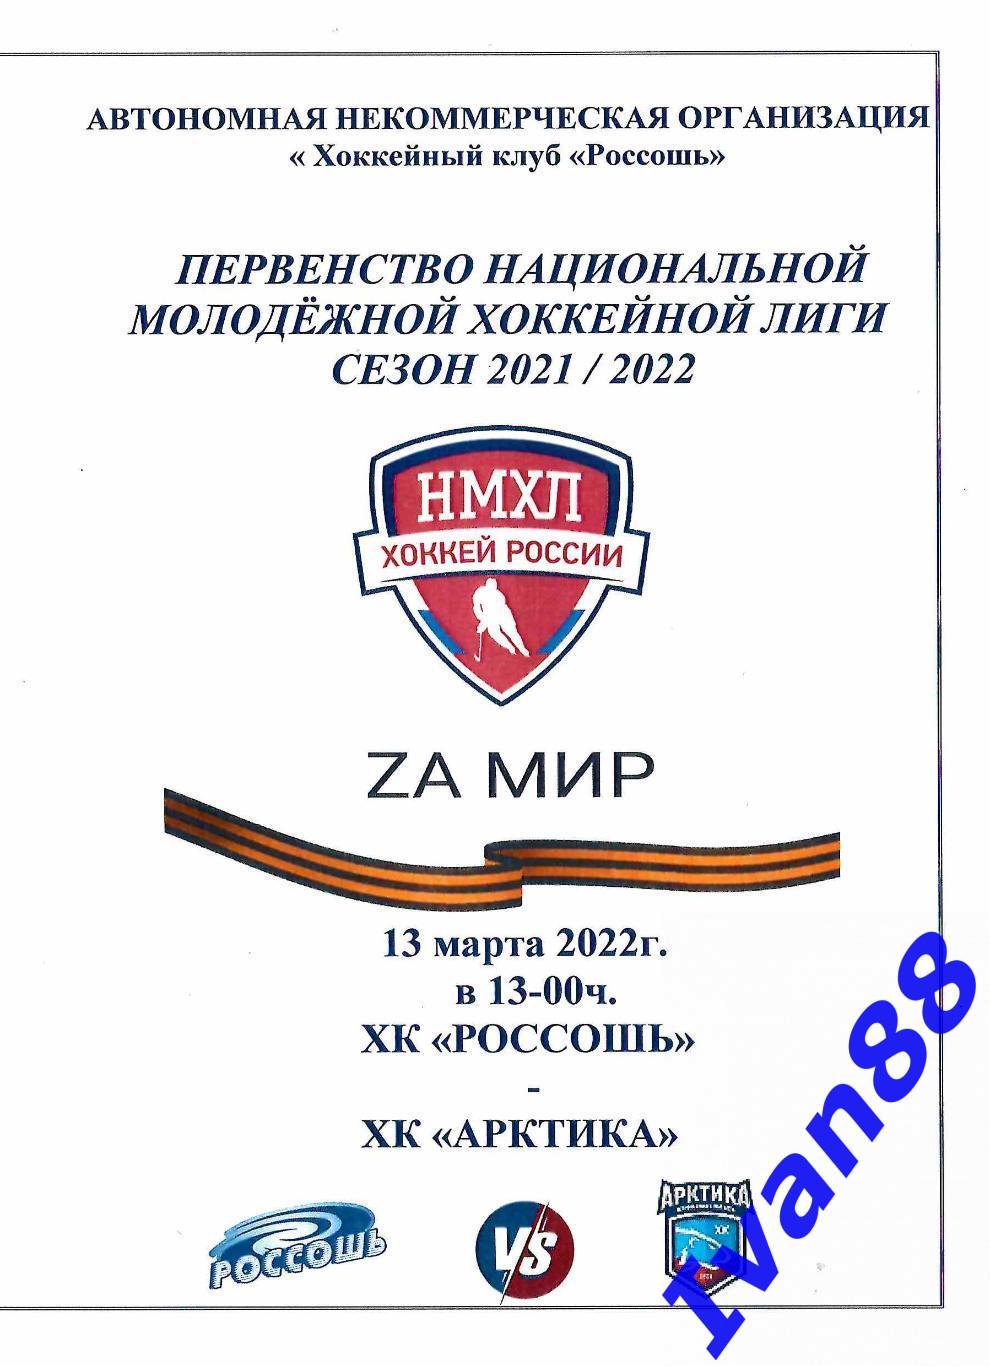 ХК Россошь - Арктика Мурманск 13 марта 2022